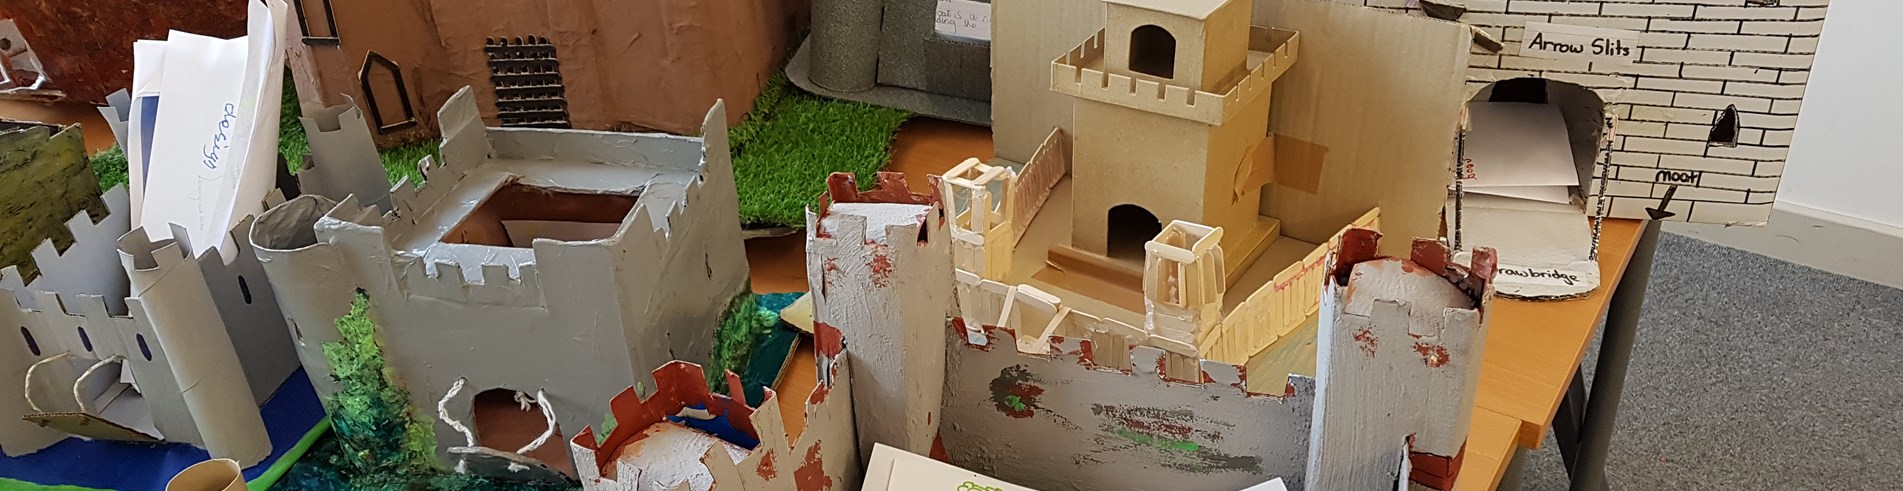 Outstanding castle homework projects